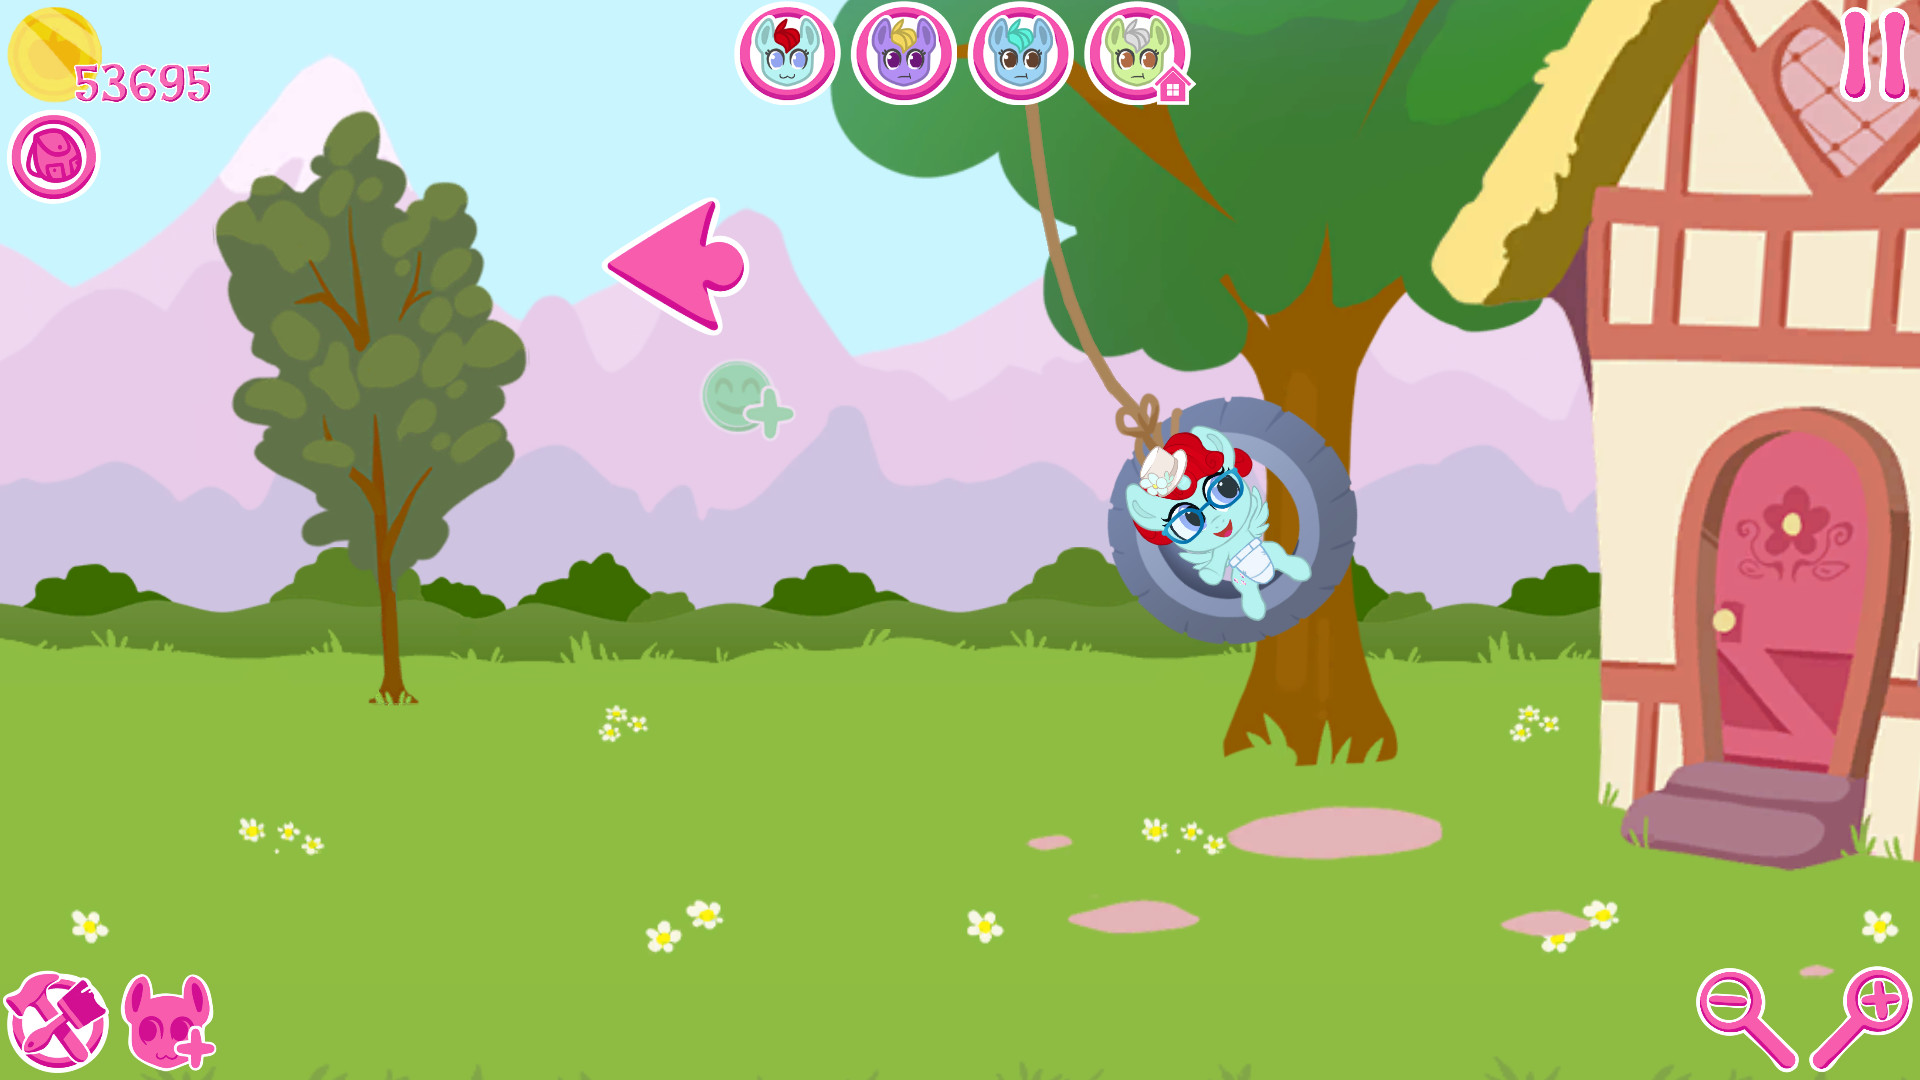 joy pony game free download